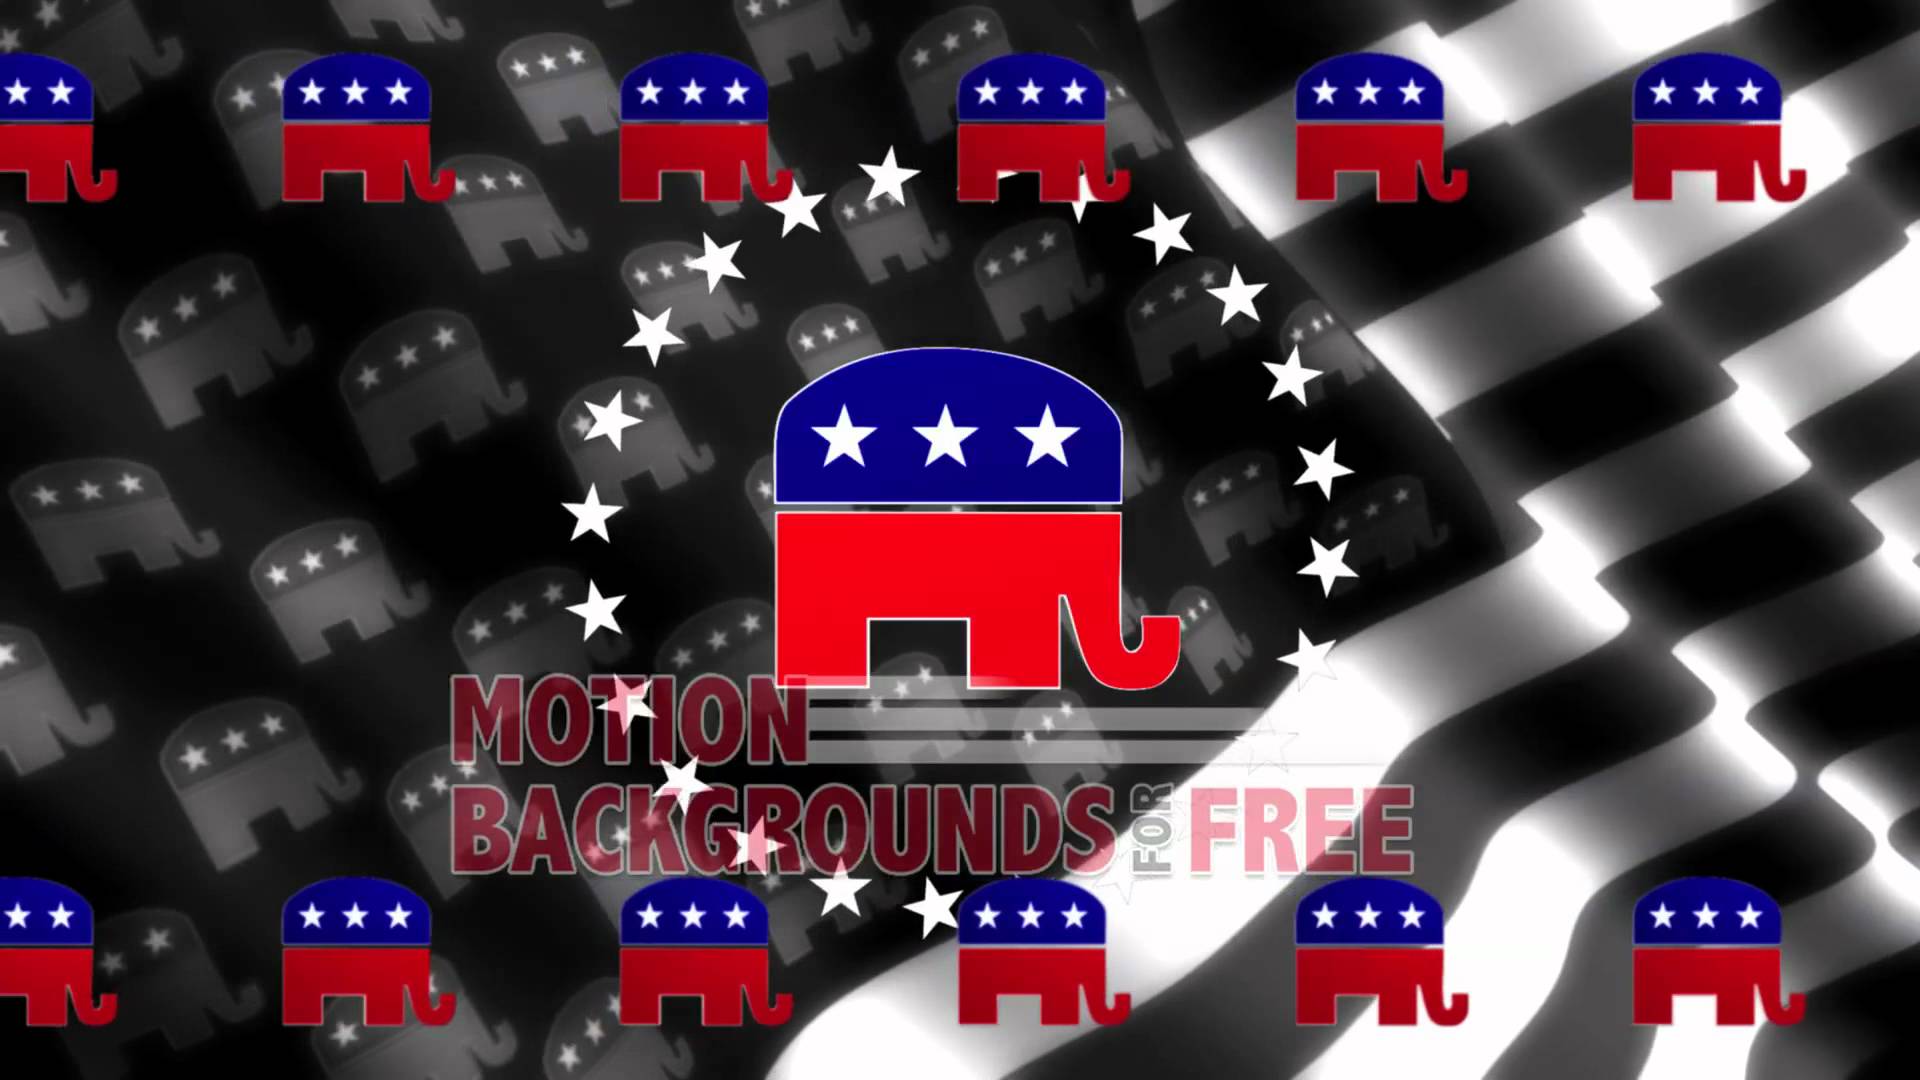 Republican Wallpaper Background Full HD 1080p Best